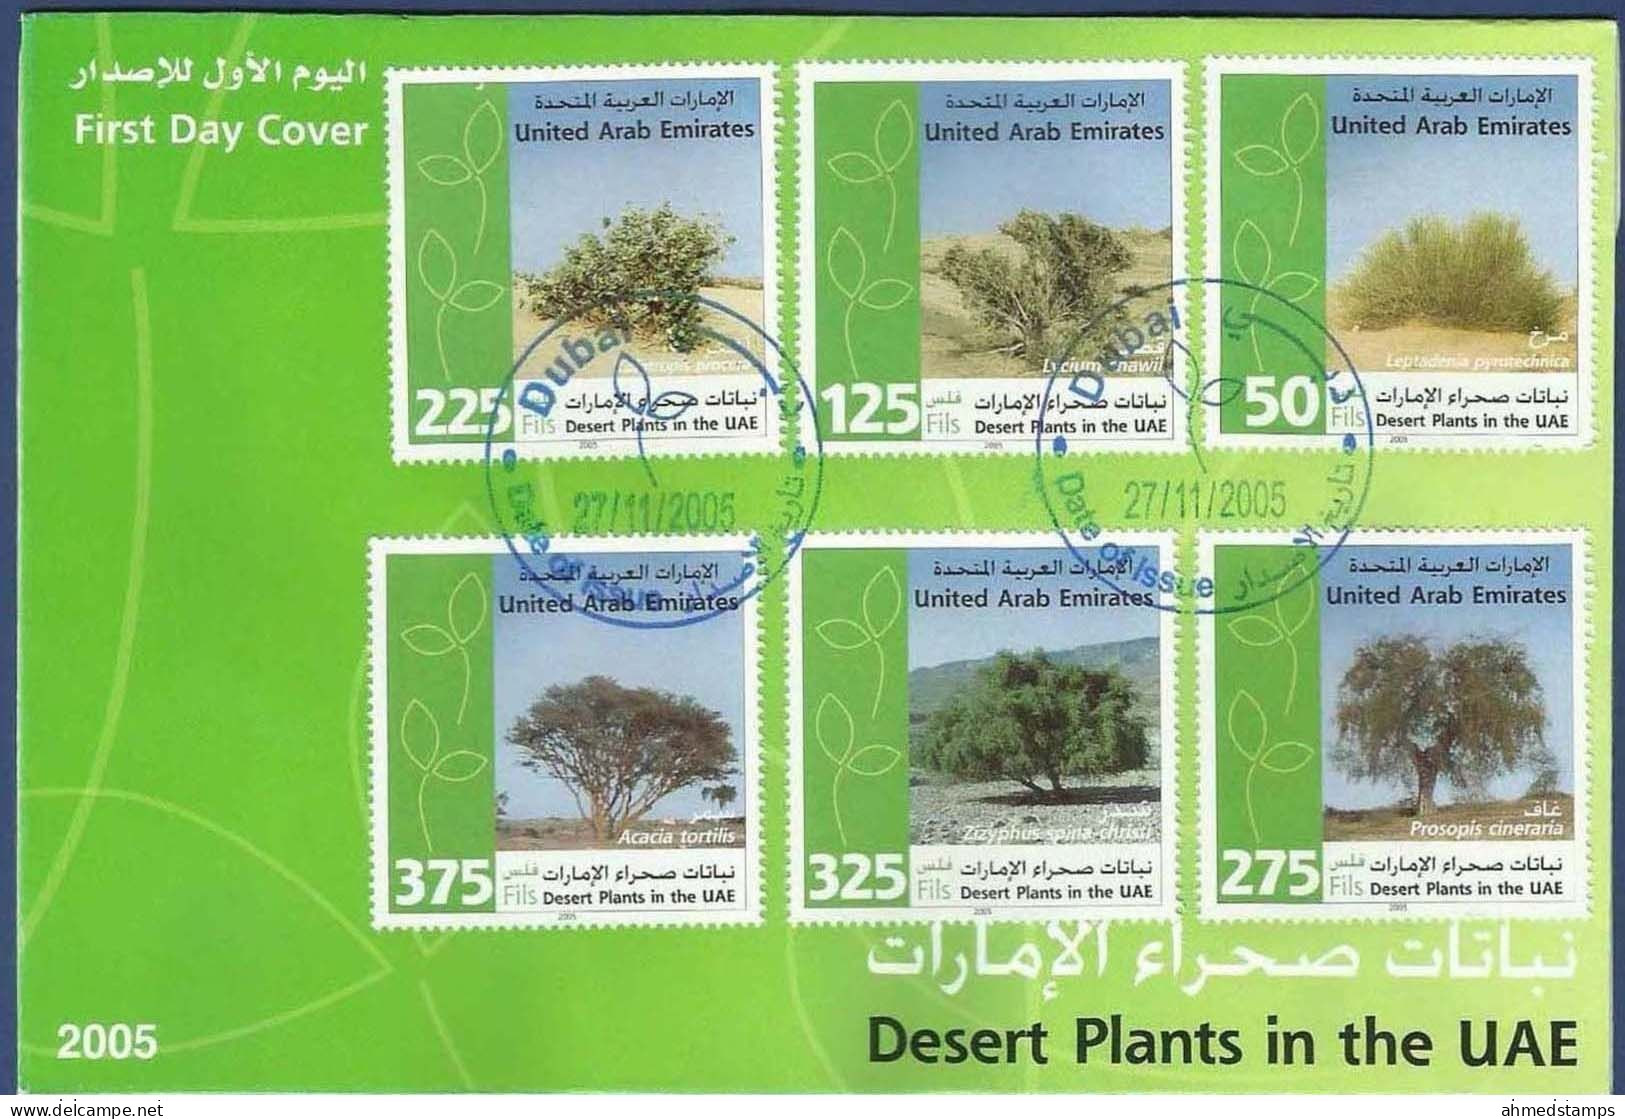 UNITED ARAB EMIRATES UAE MNH 2005 FDC FIRST DAY COVER DESERT PLANTS - Emirats Arabes Unis (Général)